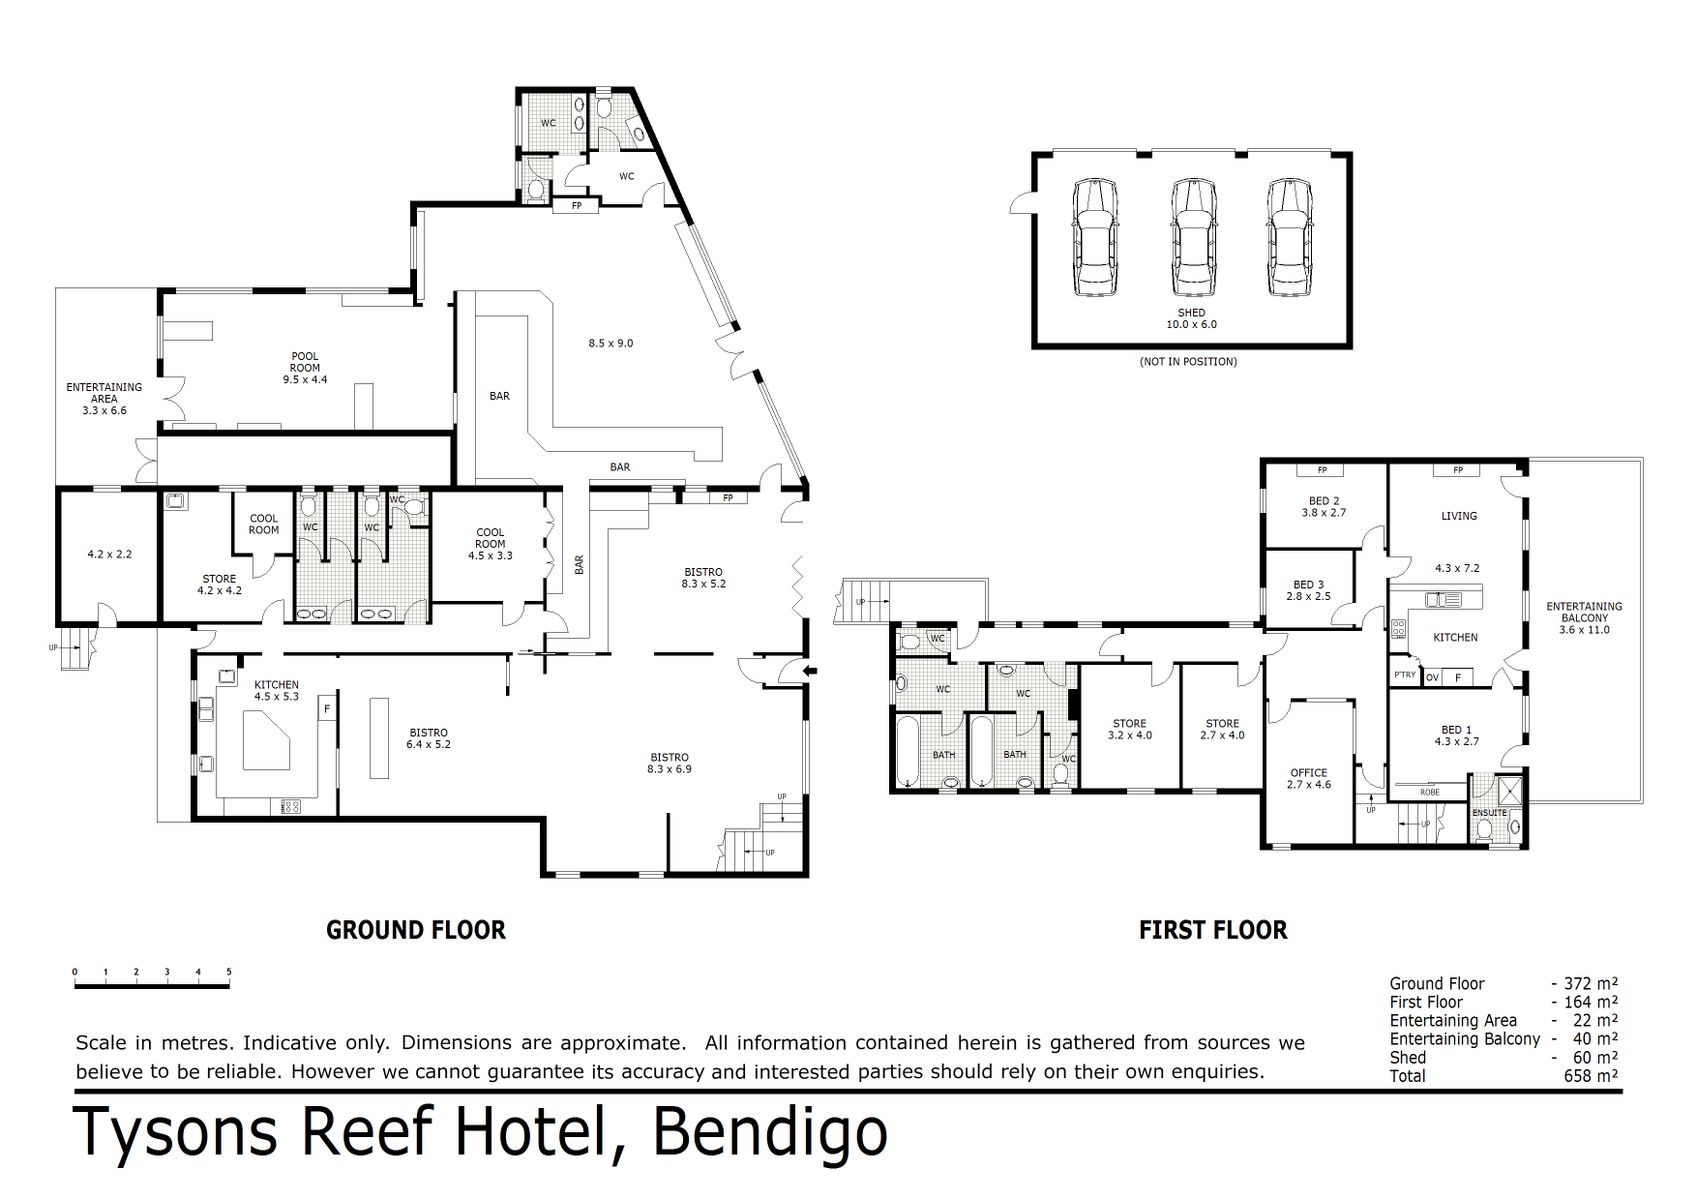 Tysons Reef Hotel Bendigo (28 MAR 2022) 536sqm (1)